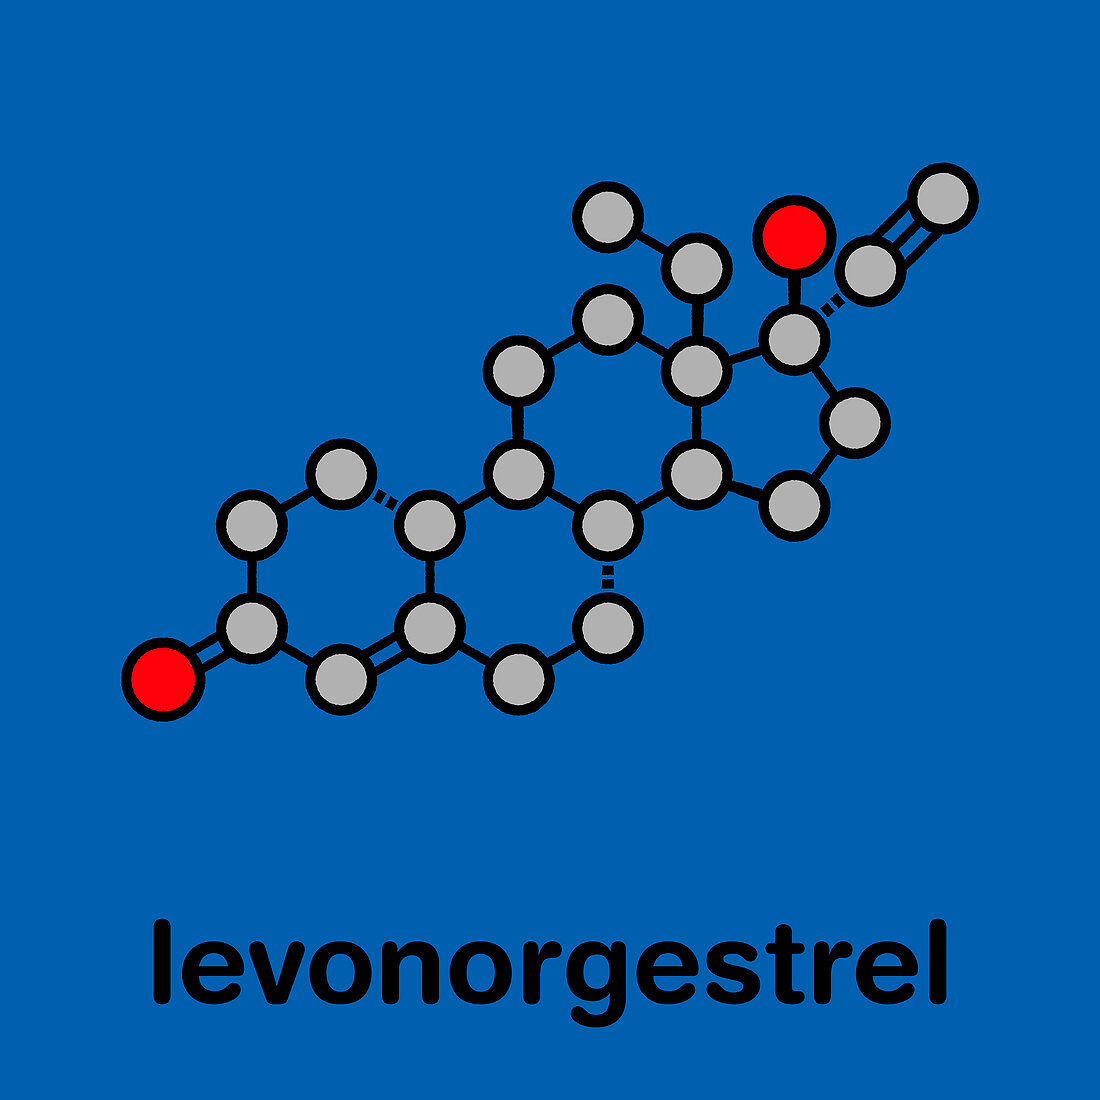 Levonorgestrel contraceptive pill drug, molecular model